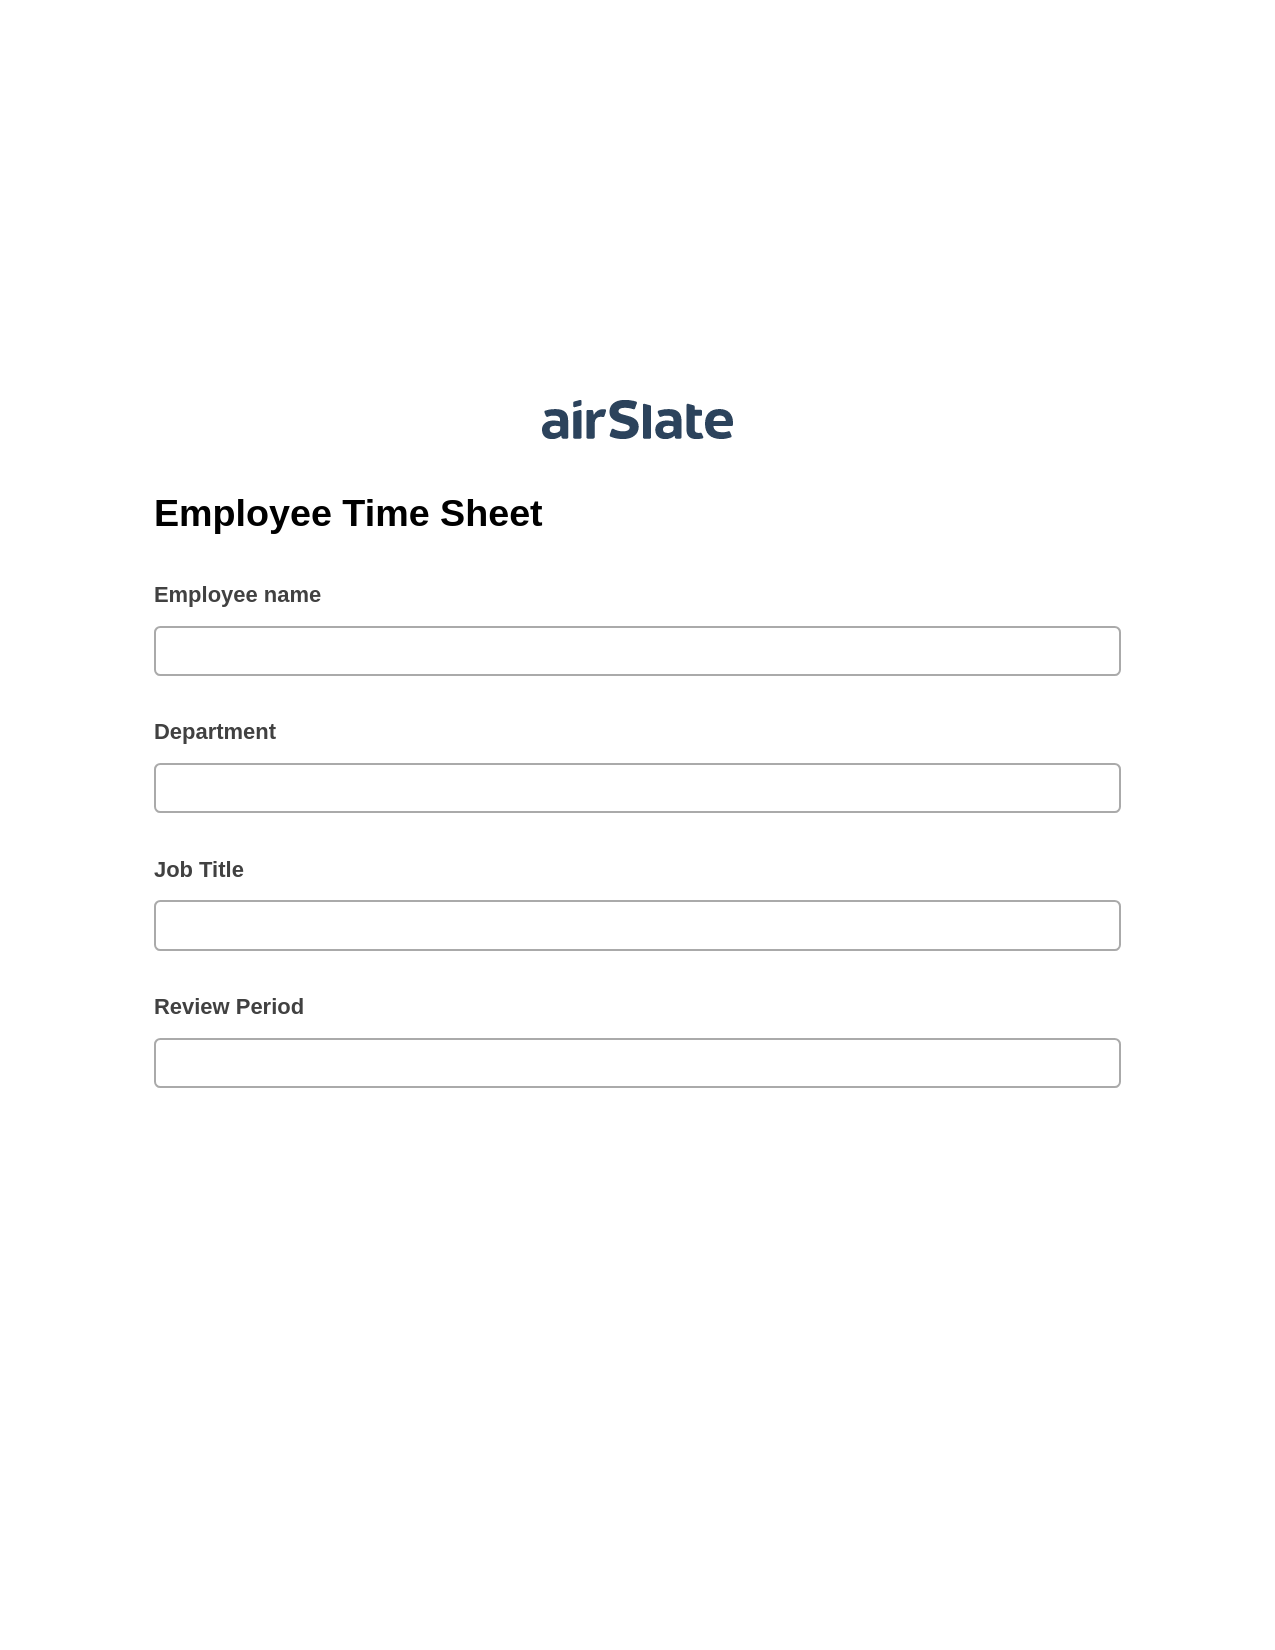 Multirole Employee Time Sheet Pre-fill from Salesforce Records Bot, Create slate addon, Webhook Postfinish Bot